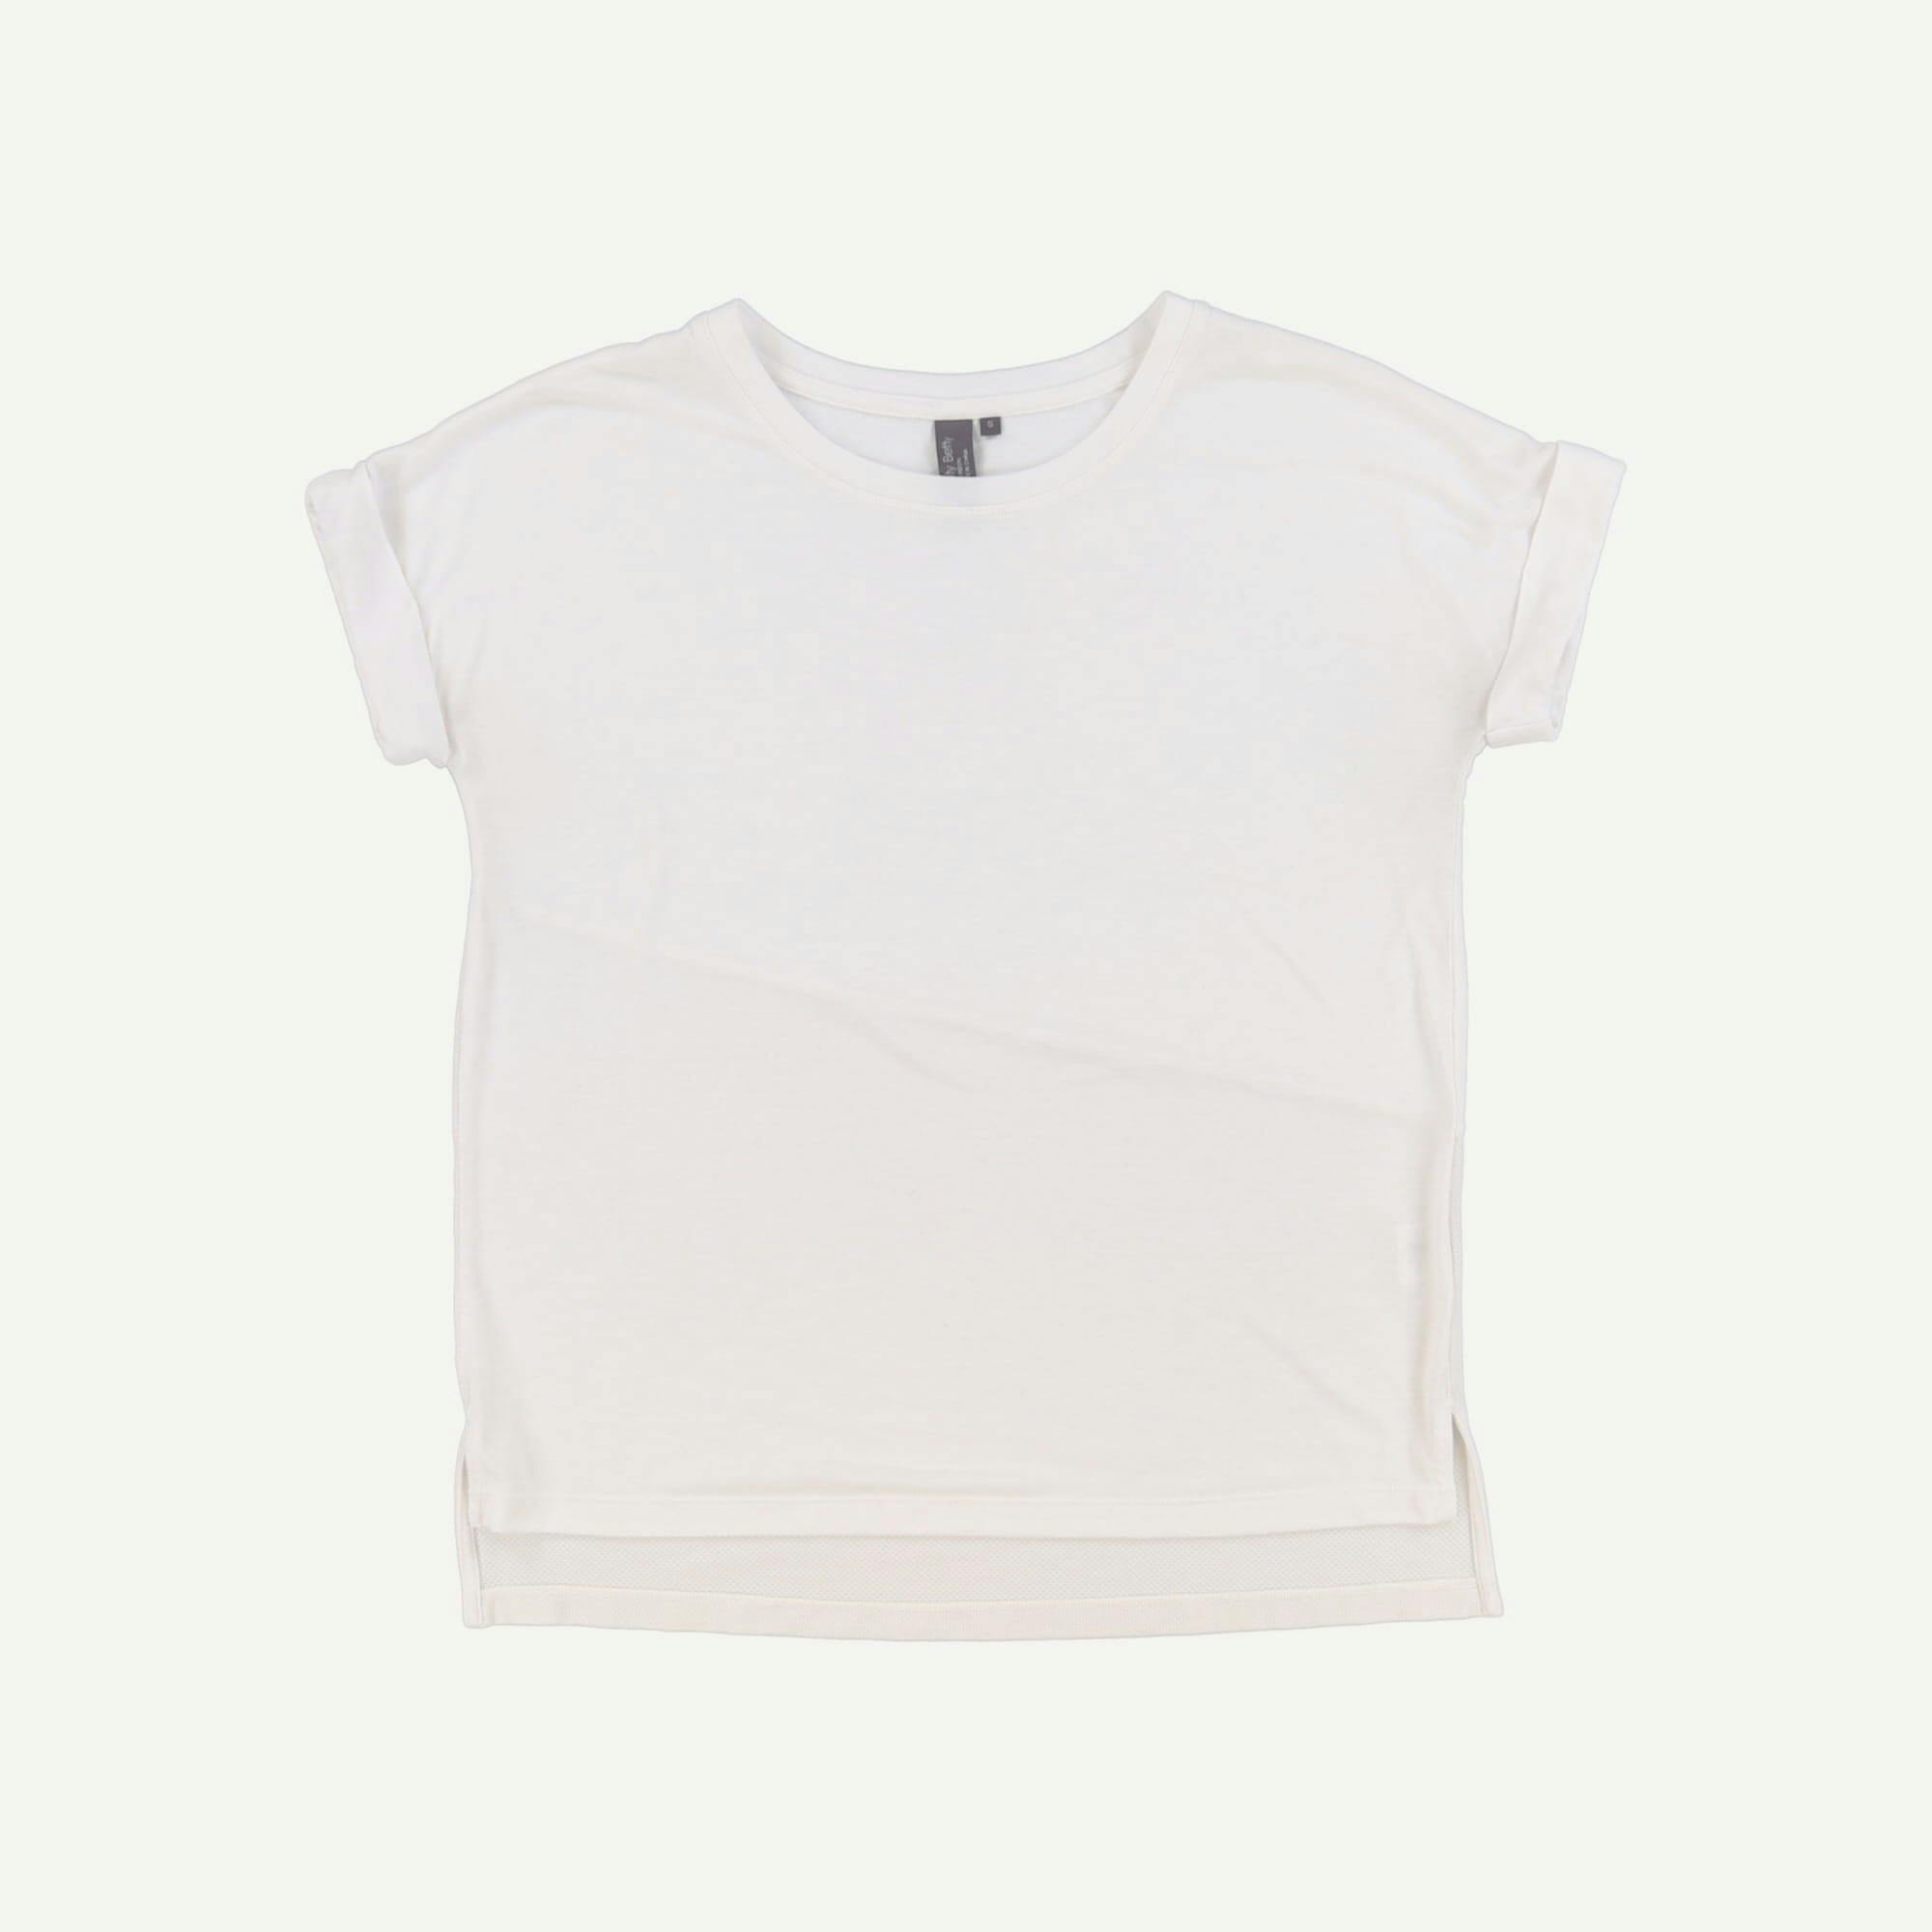 Sweaty Betty Pre-loved White T-shirt